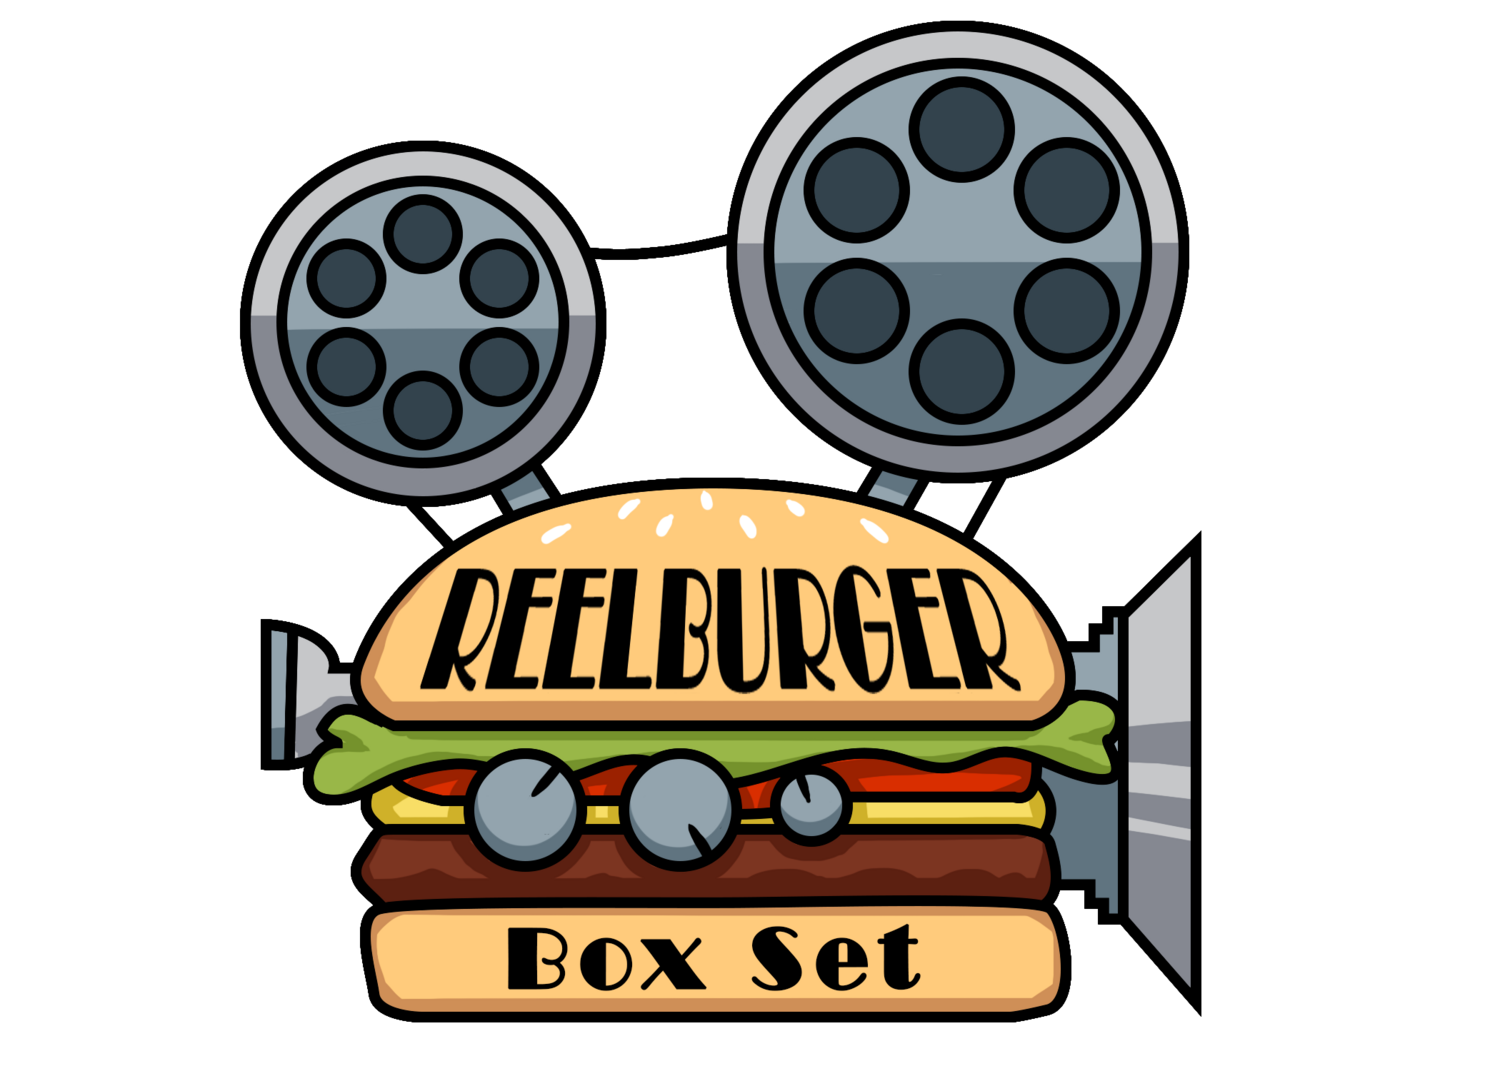 The Reelburger Box Set